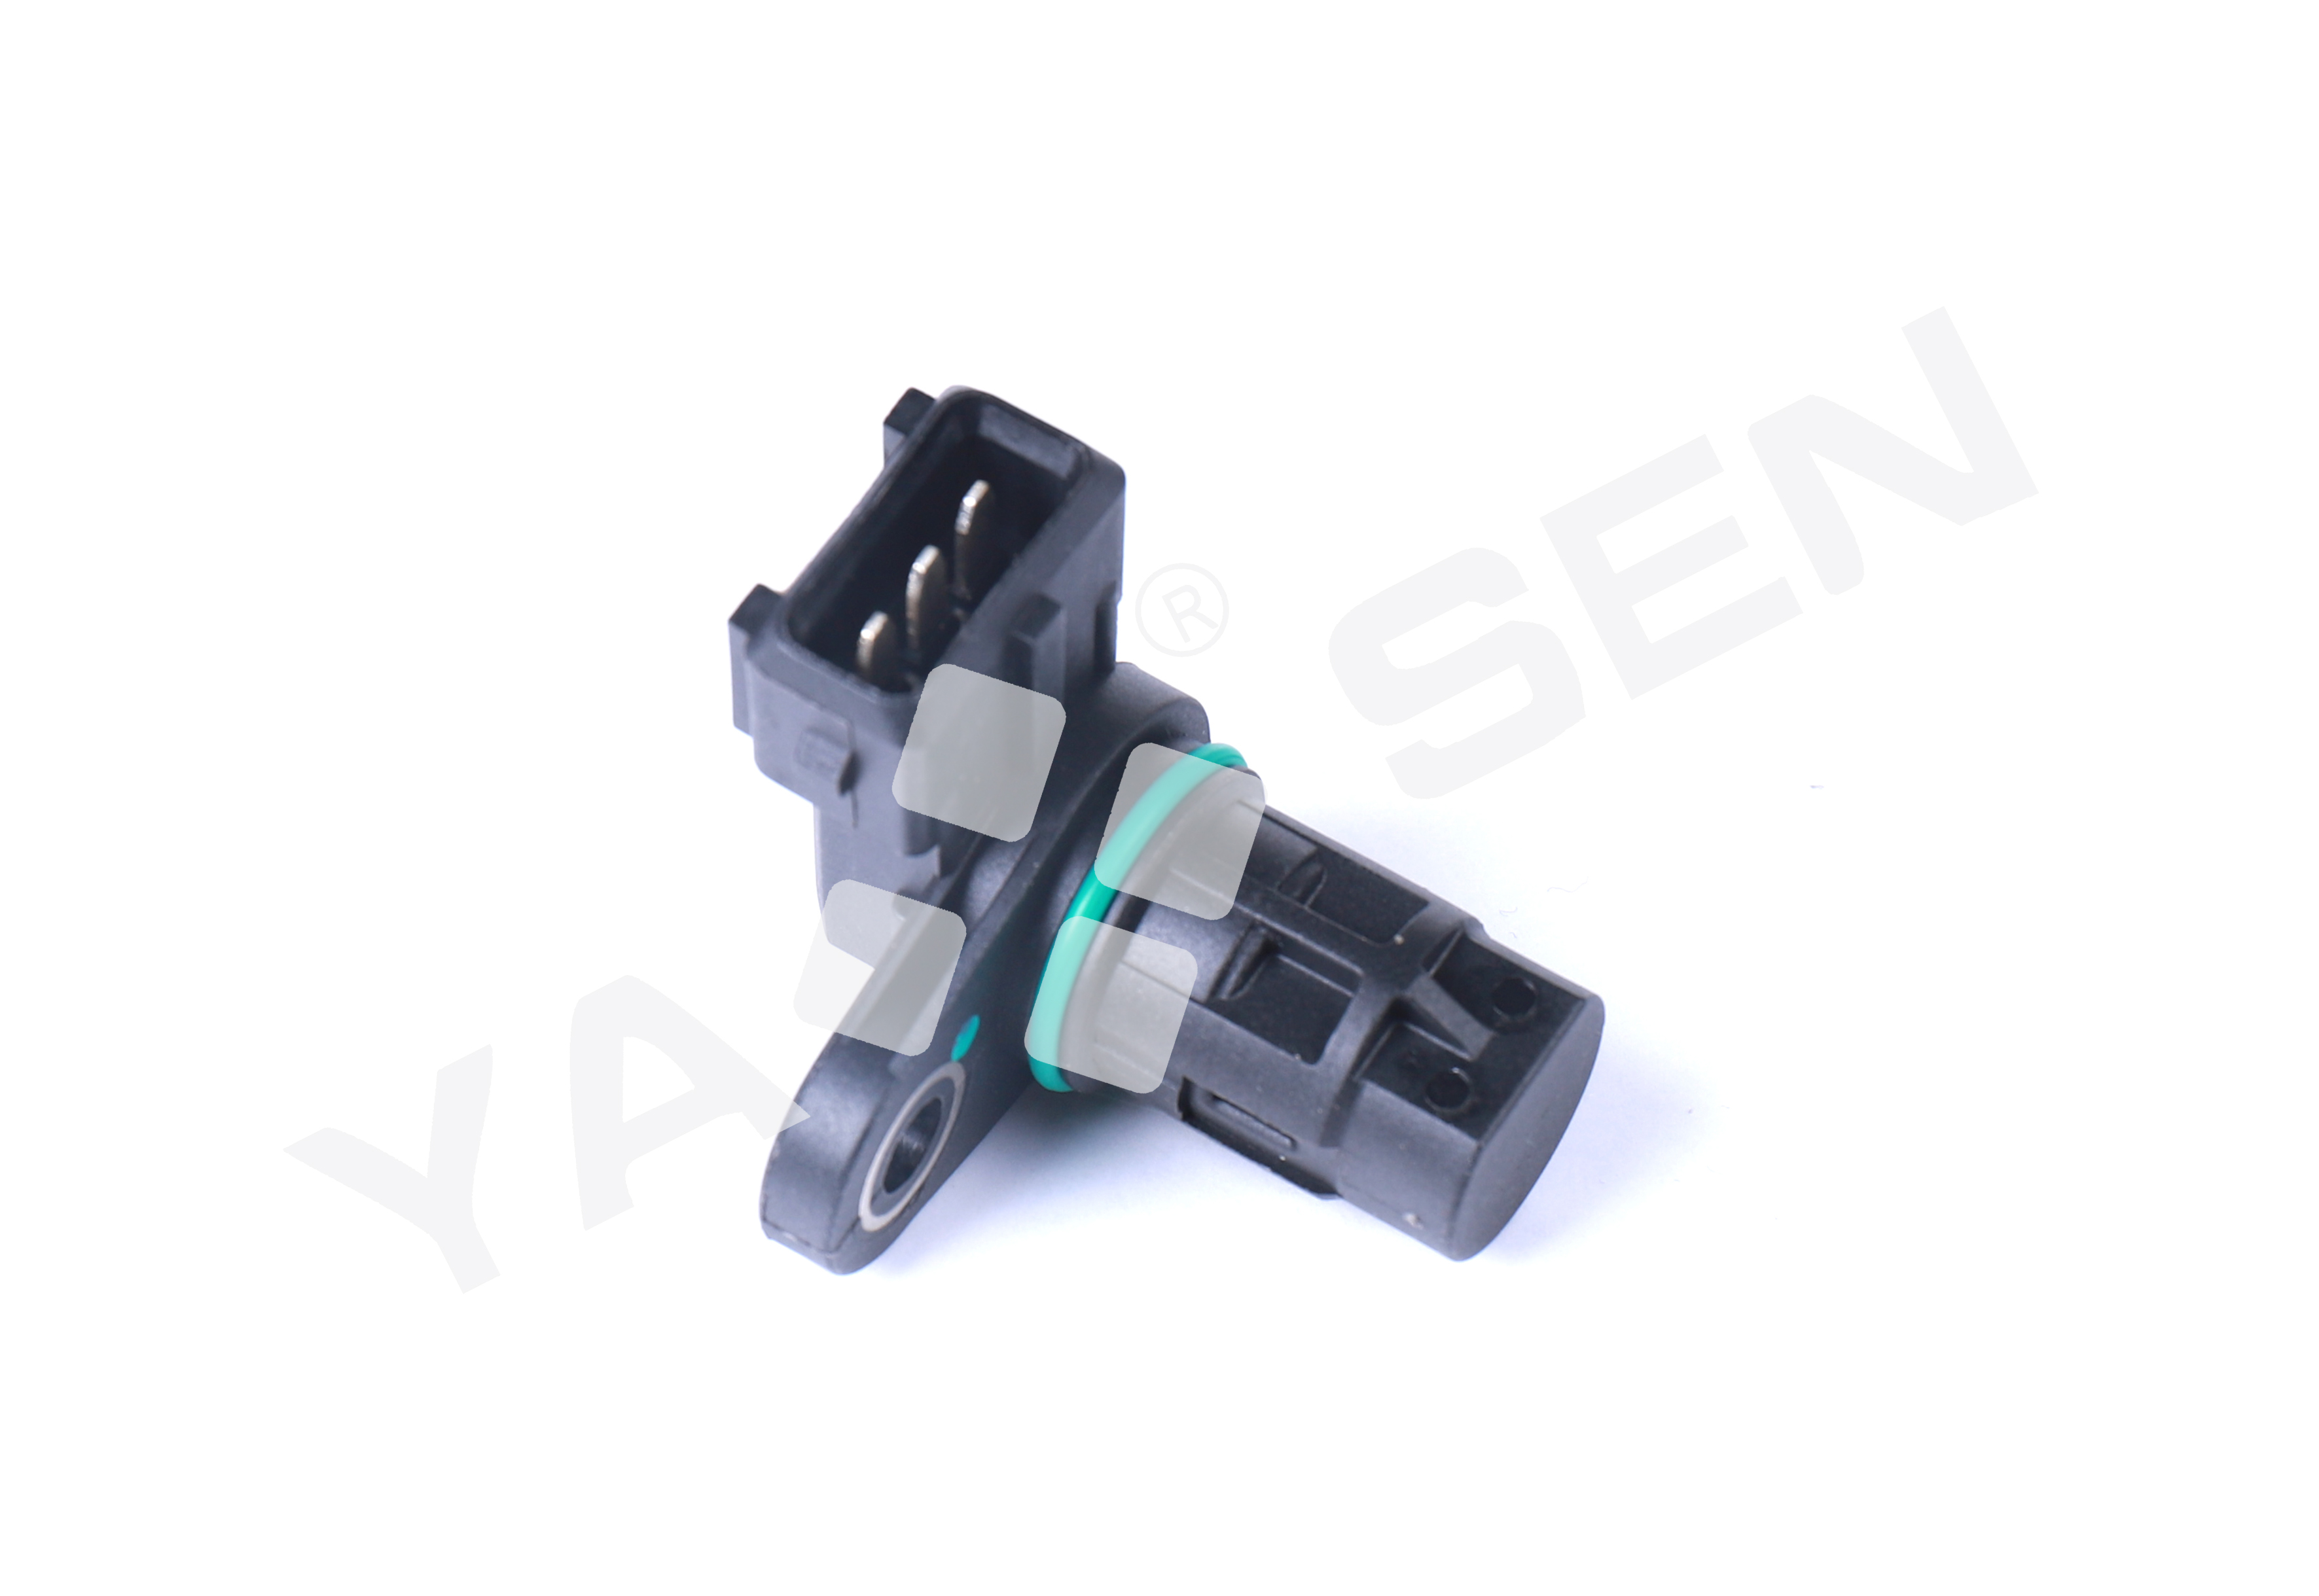 Auto Camshaft position sensor  for HYUNDAI/KIA, PC661 1802-204348 39350-23910 204348 5S5699 CSS1661 180-0355 SU7194 71-5170 80223